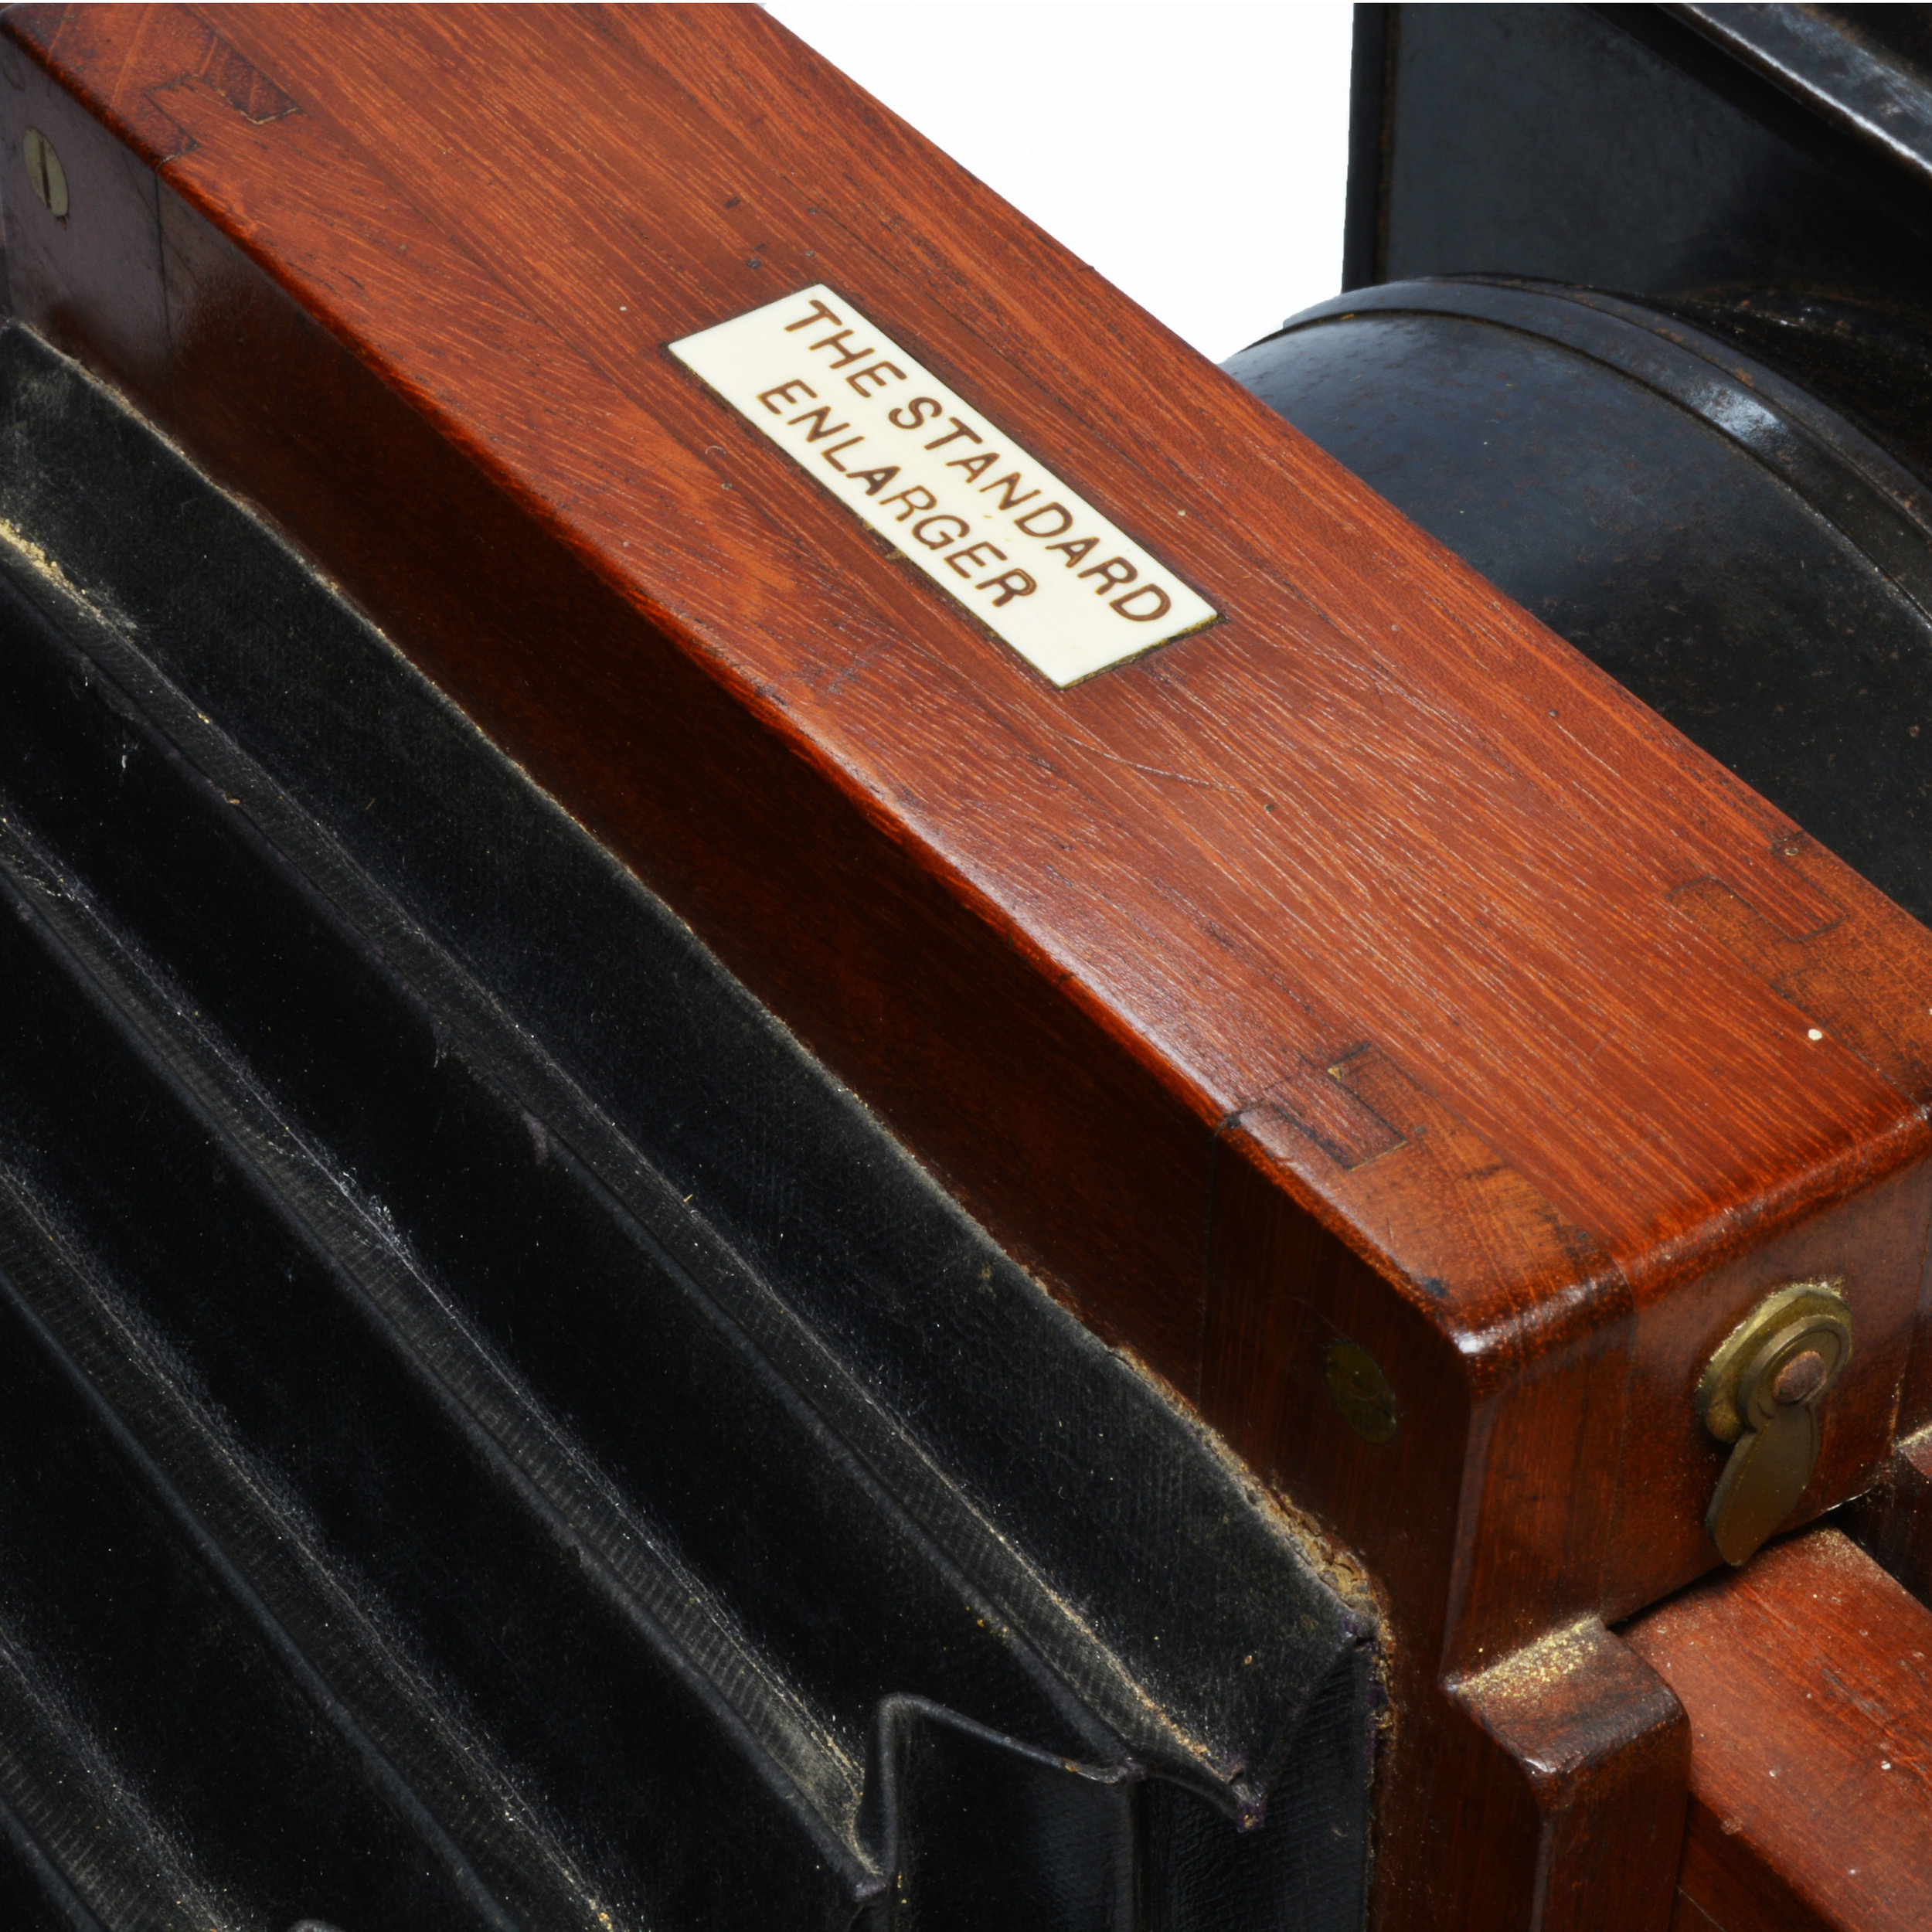 'The Standard' antique horizontal enlarger